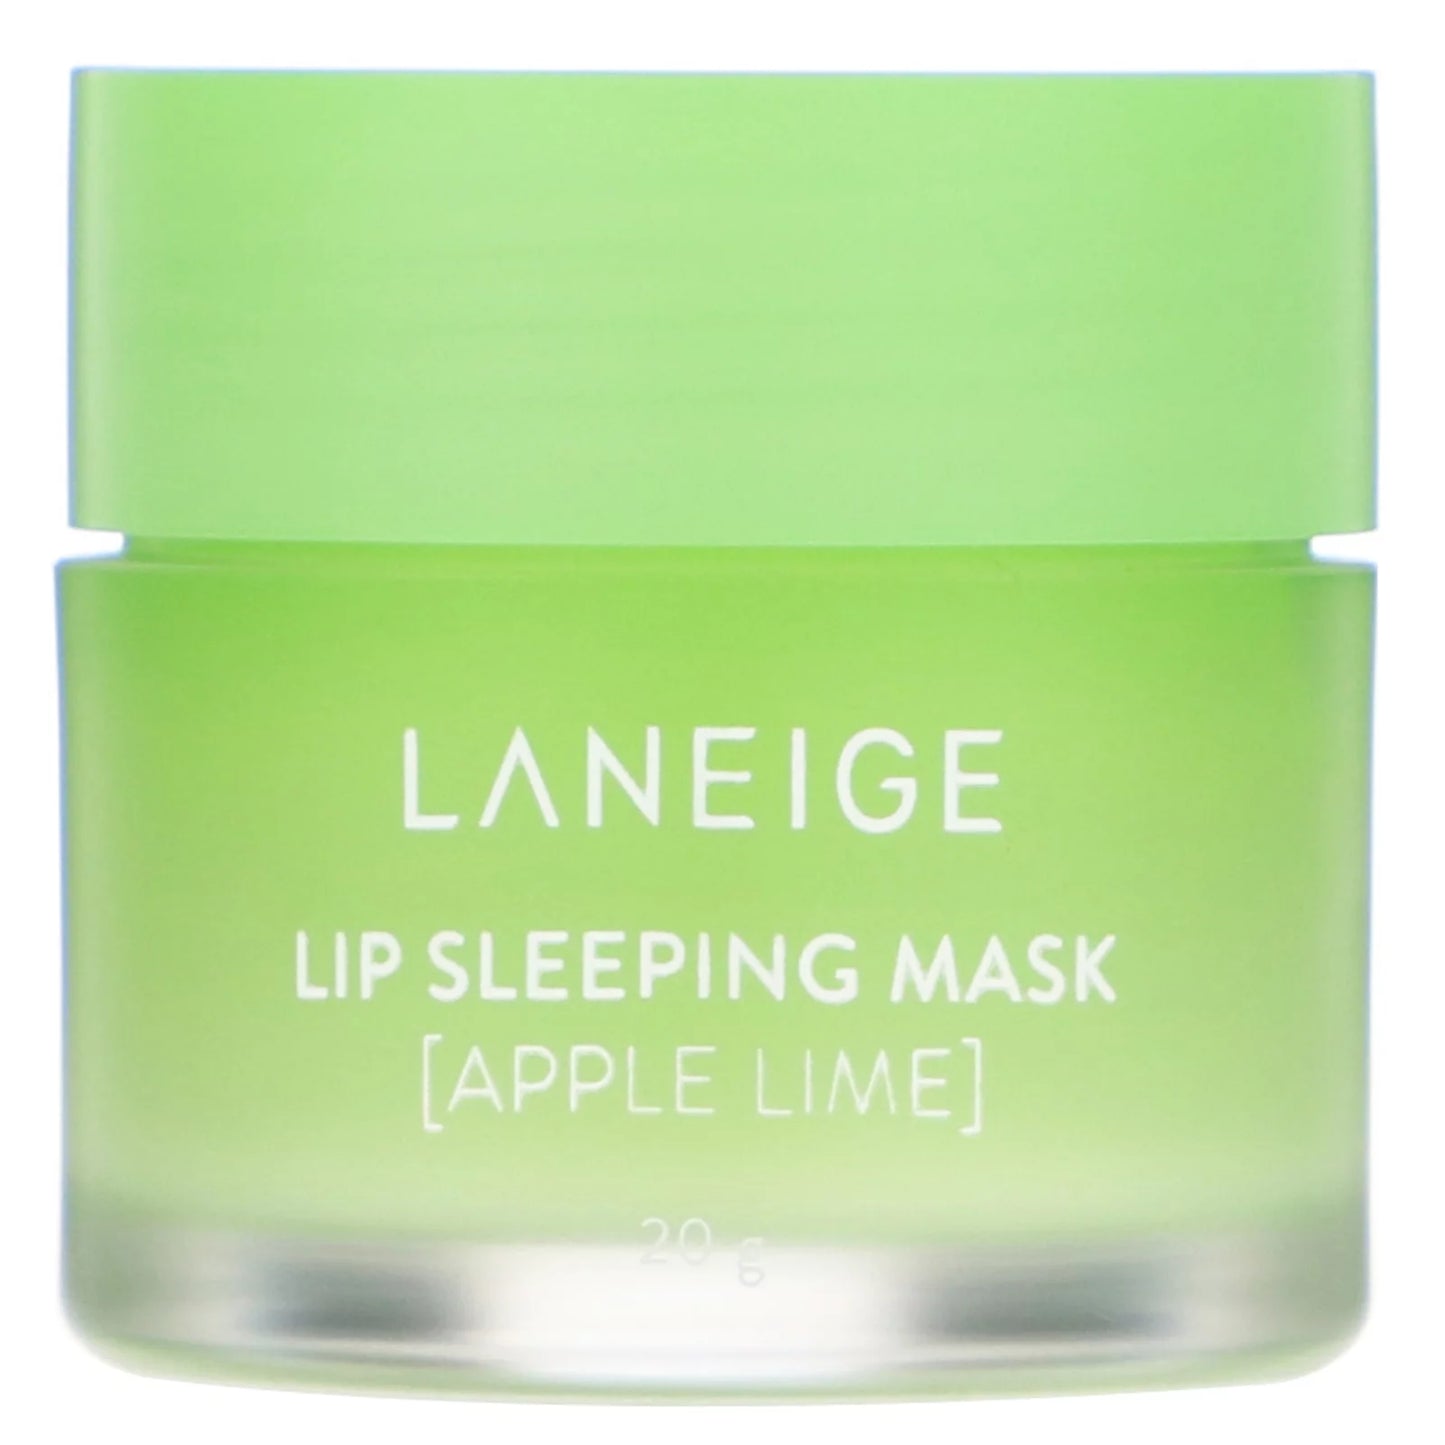 Lip Sleeping Mask Apple Lime